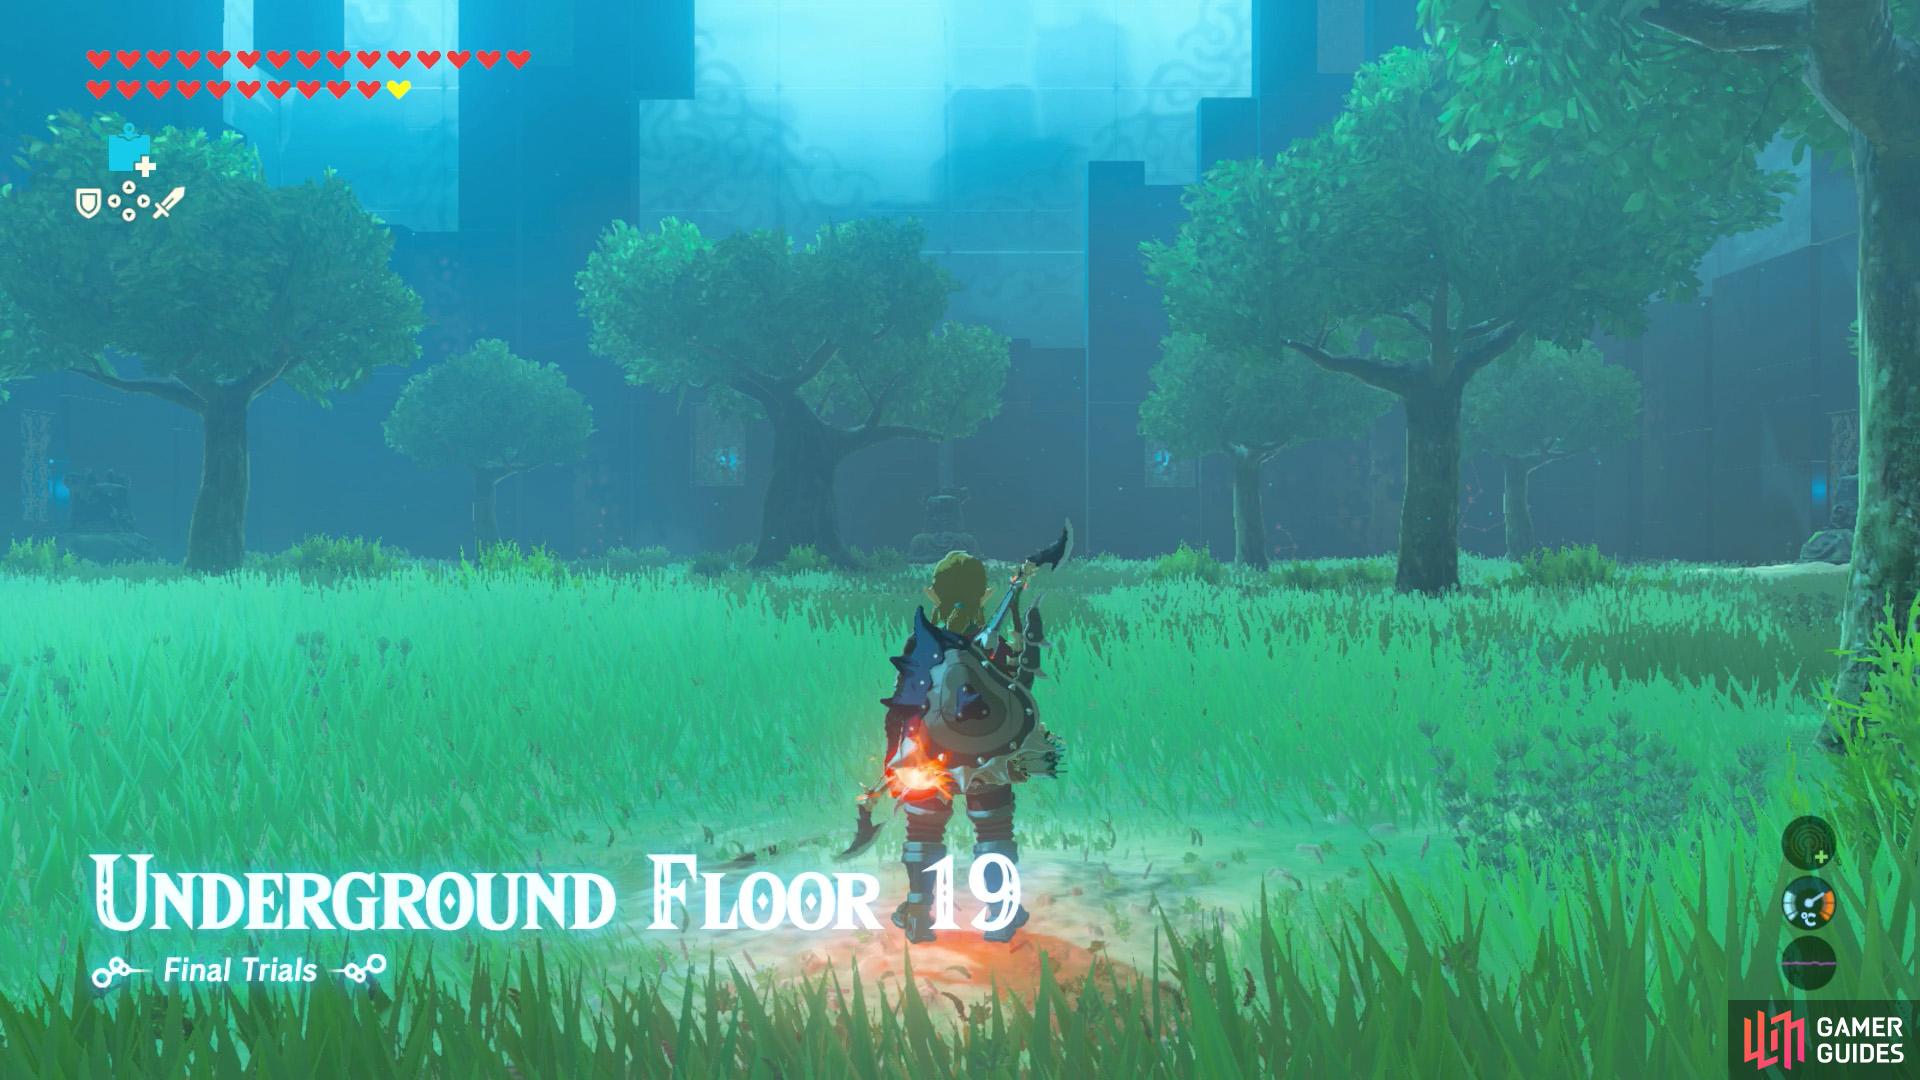 The Legend of Zelda: Breath of the Wild - The Cutting Room Floor